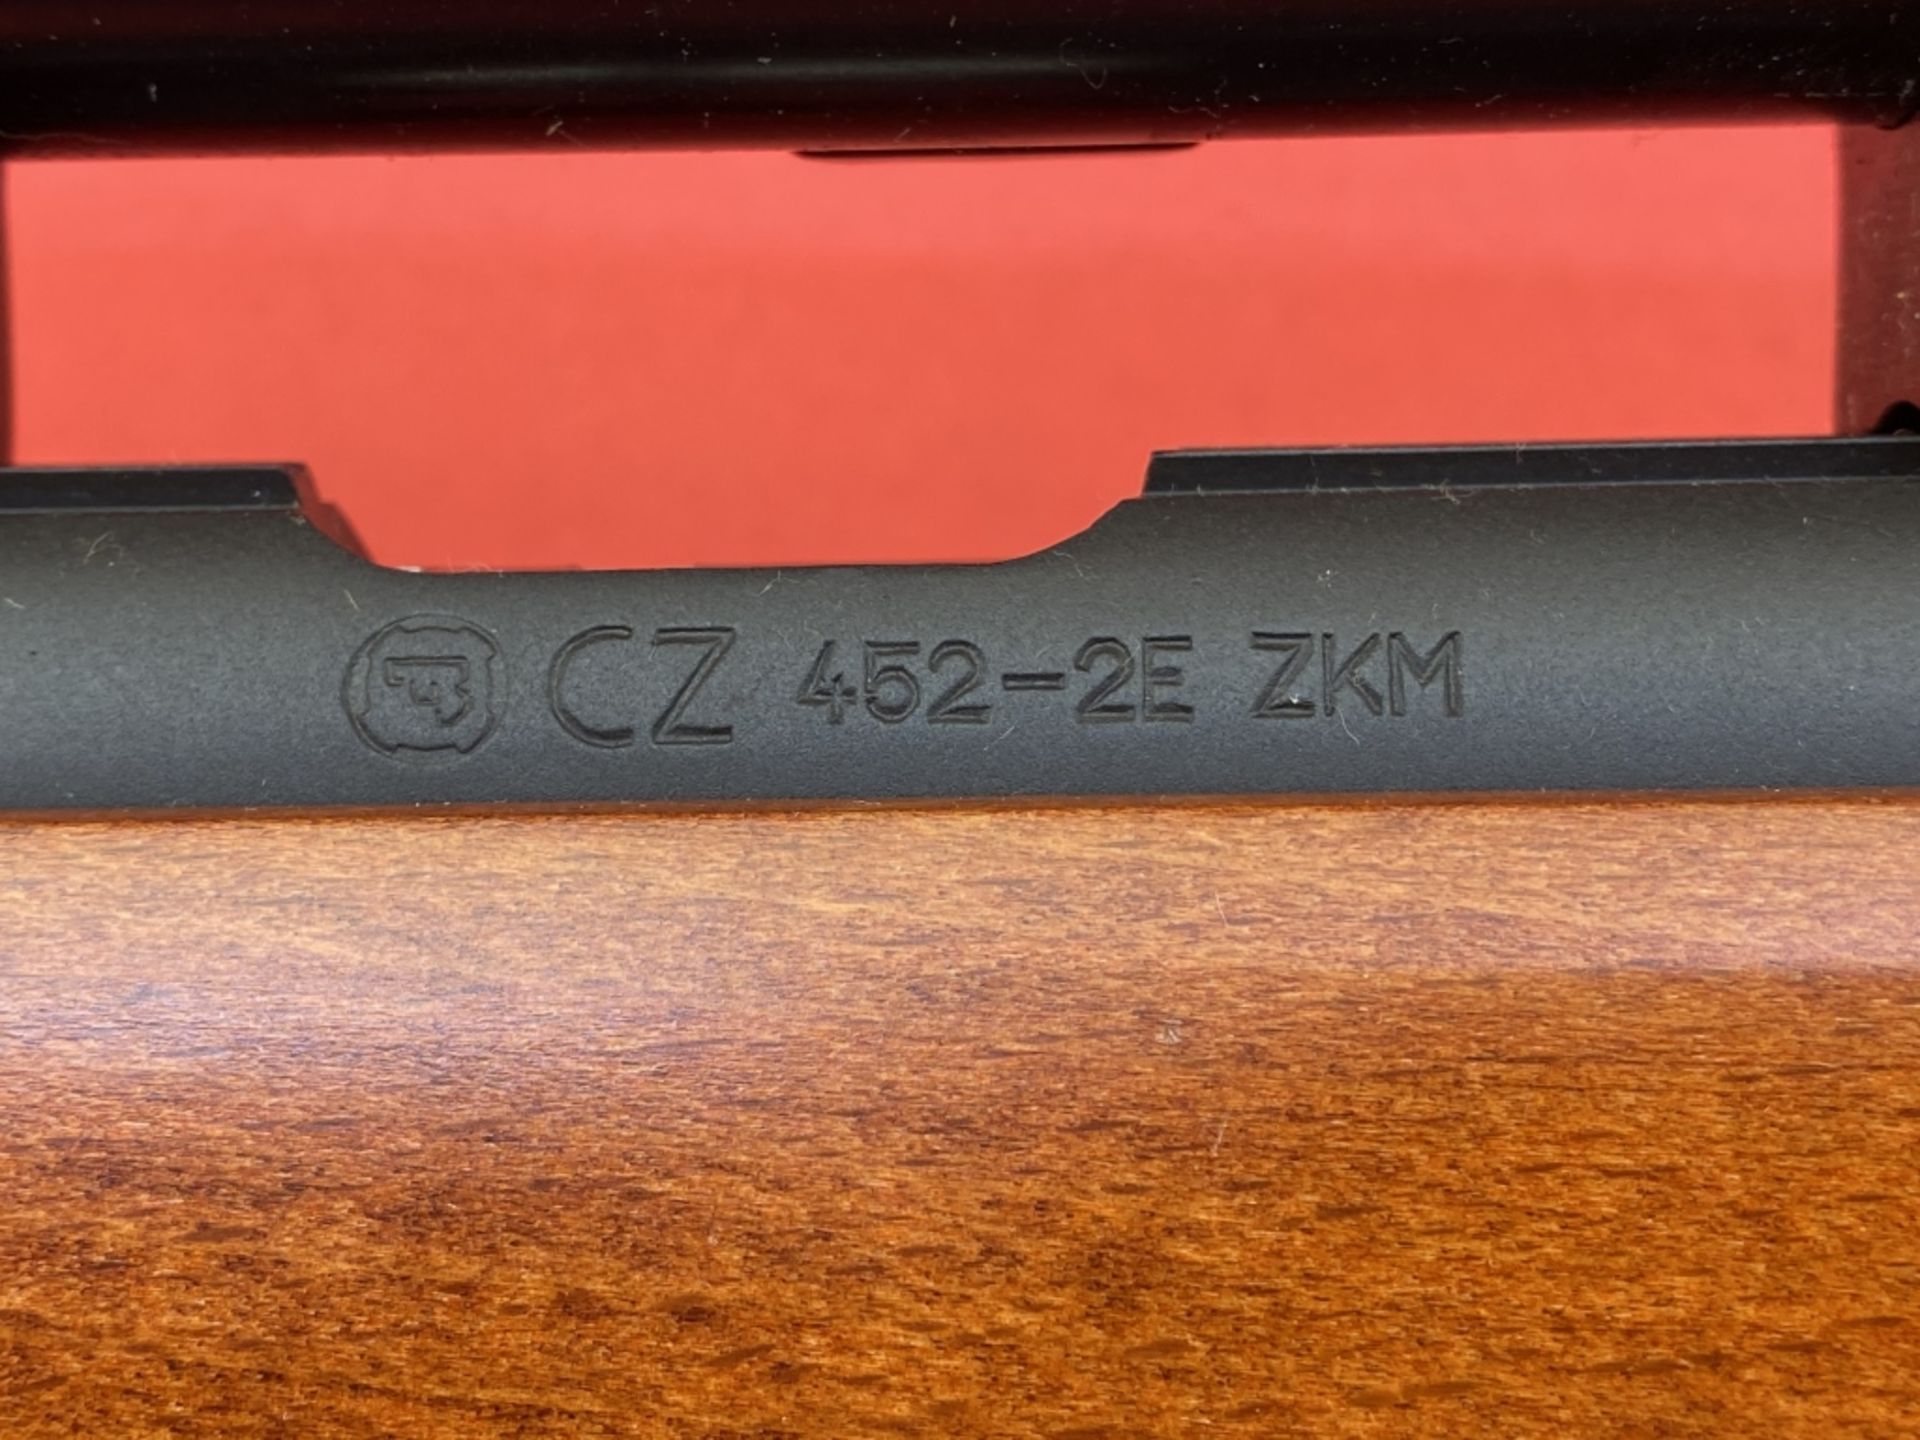 CZ 452 .22LR Rifle - Image 10 of 14